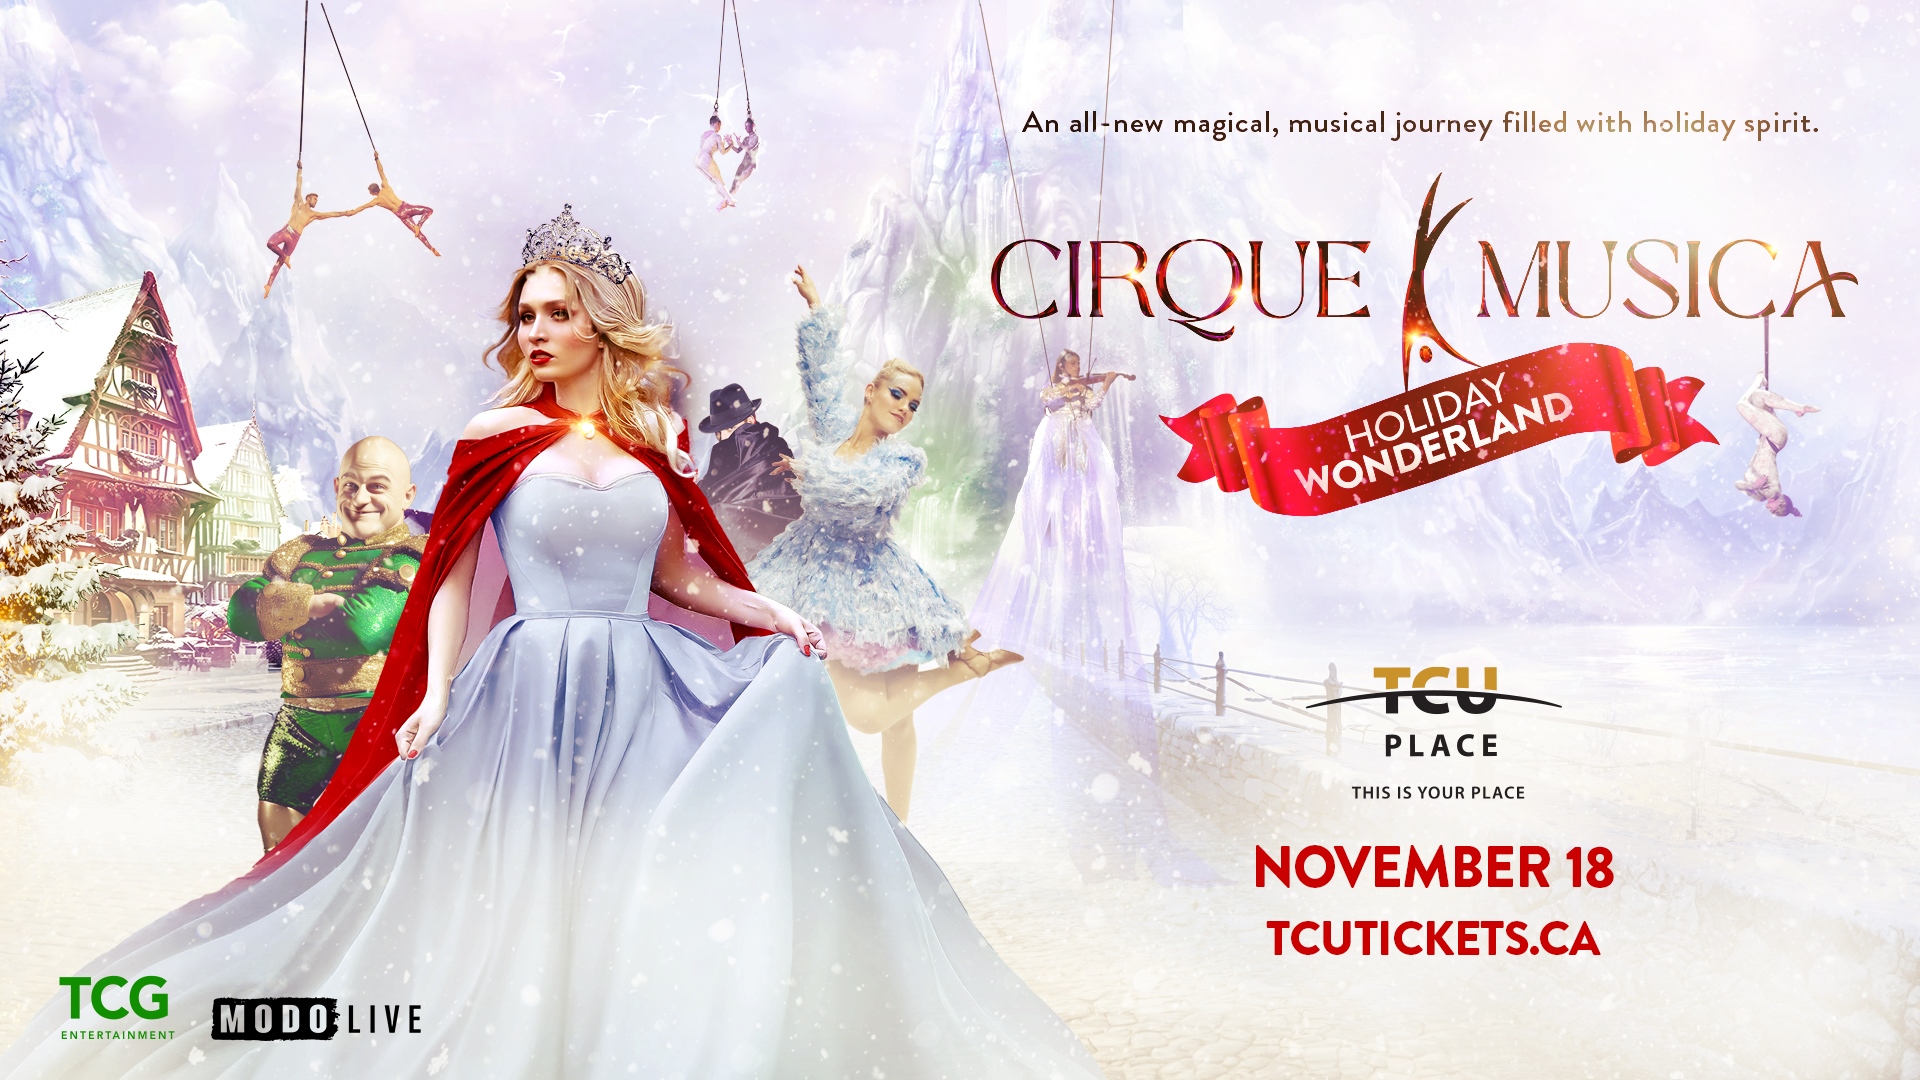 Cirque Musica Holiday Wonderland - November 18th at TCU Place